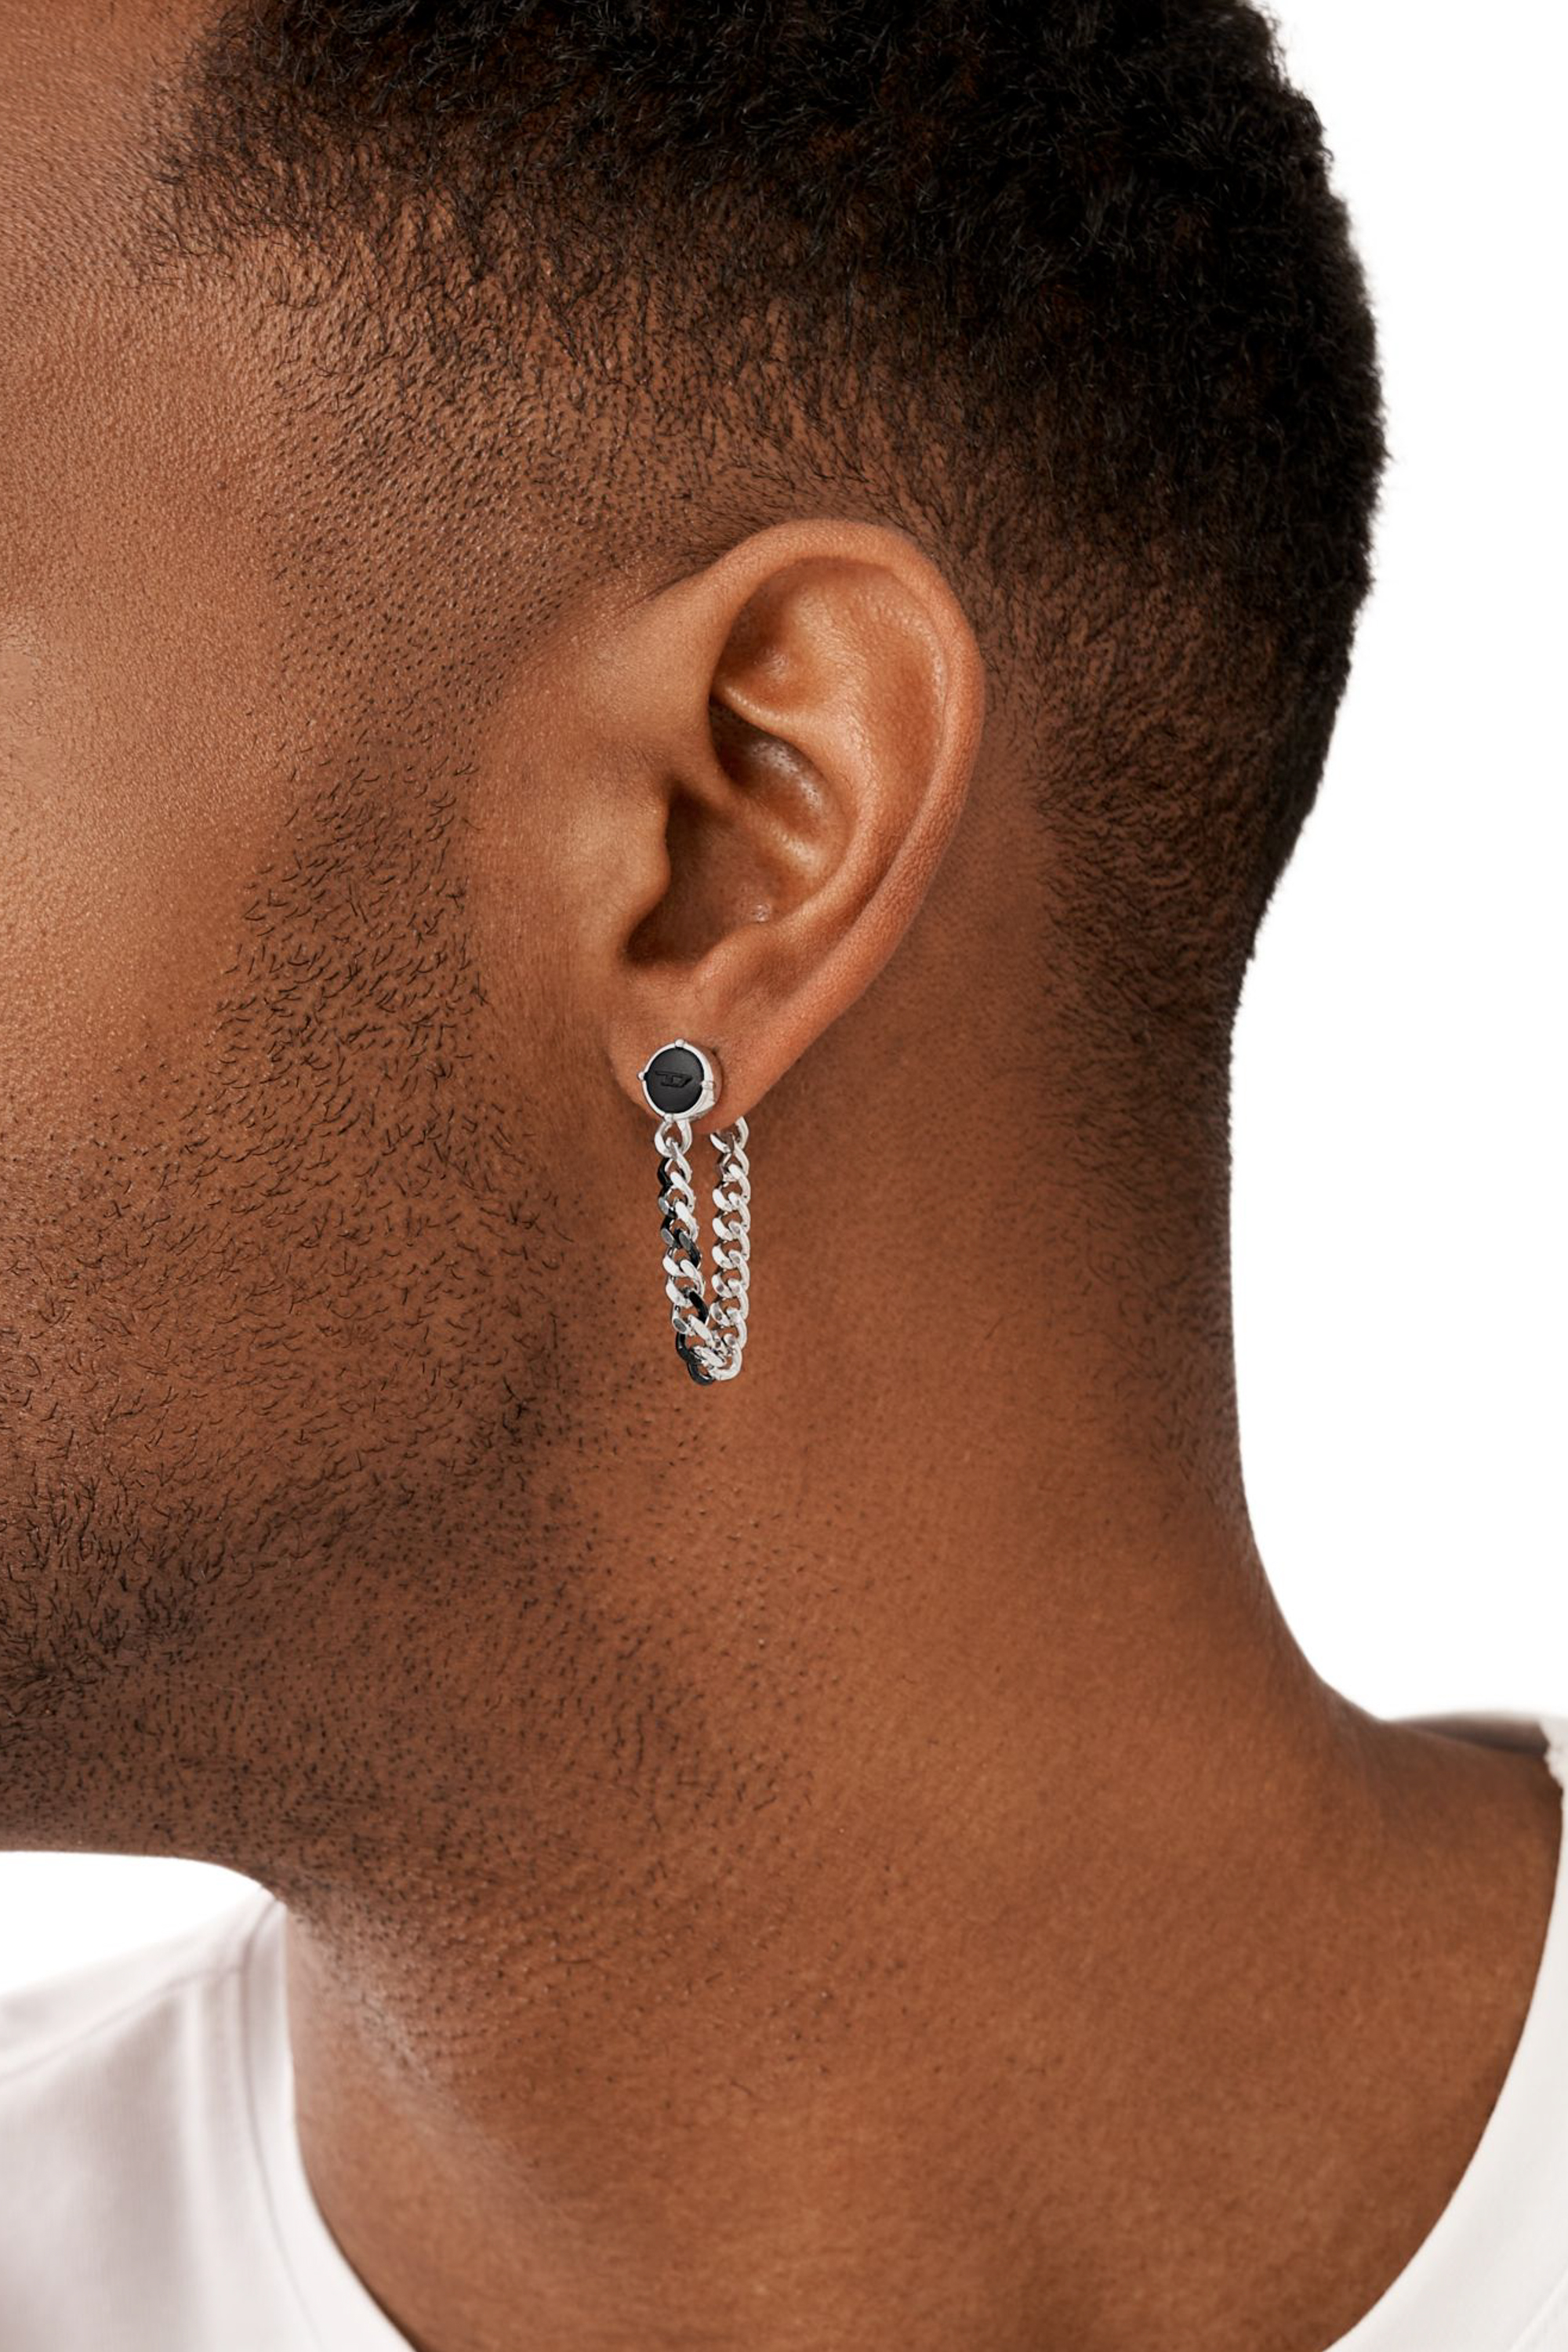 Diesel - DX1500, Male Stainless steel stud earring in シルバー - Image 3